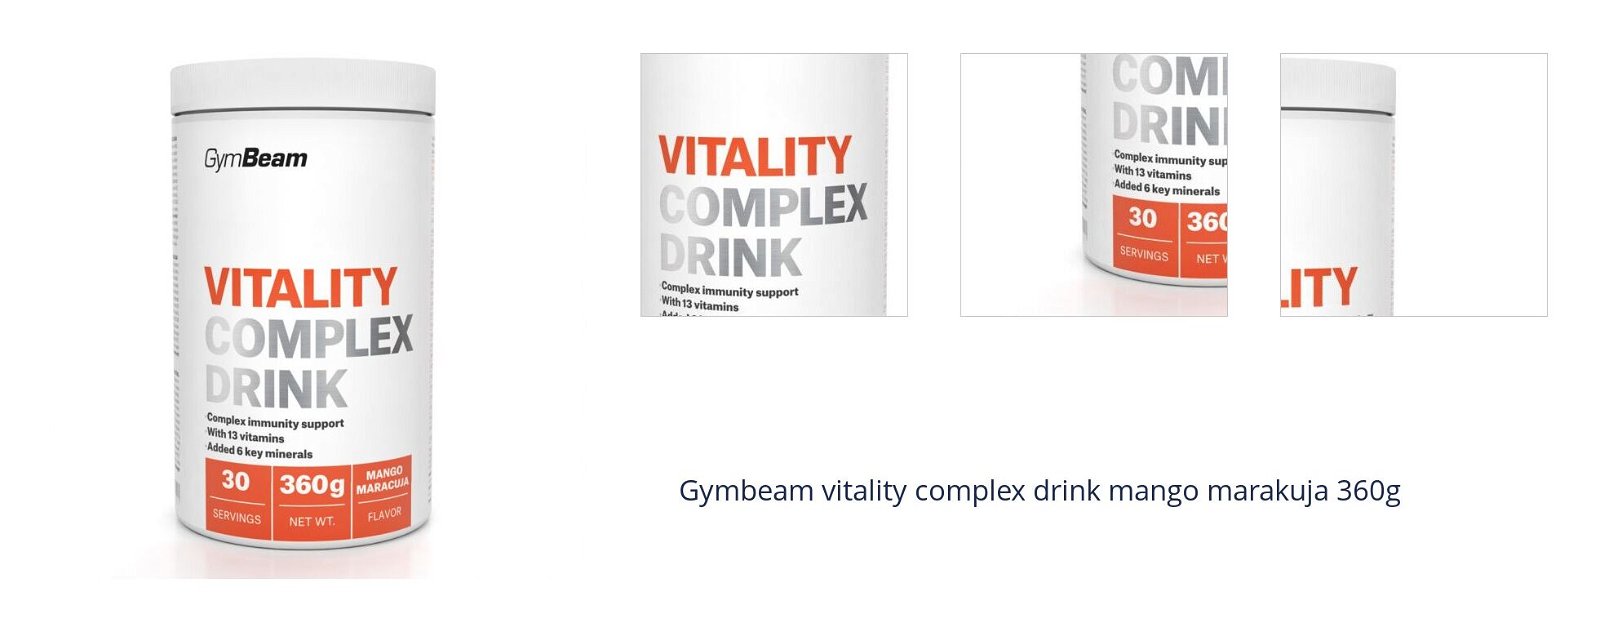 Gymbeam vitality complex drink mango marakuja 360g 1